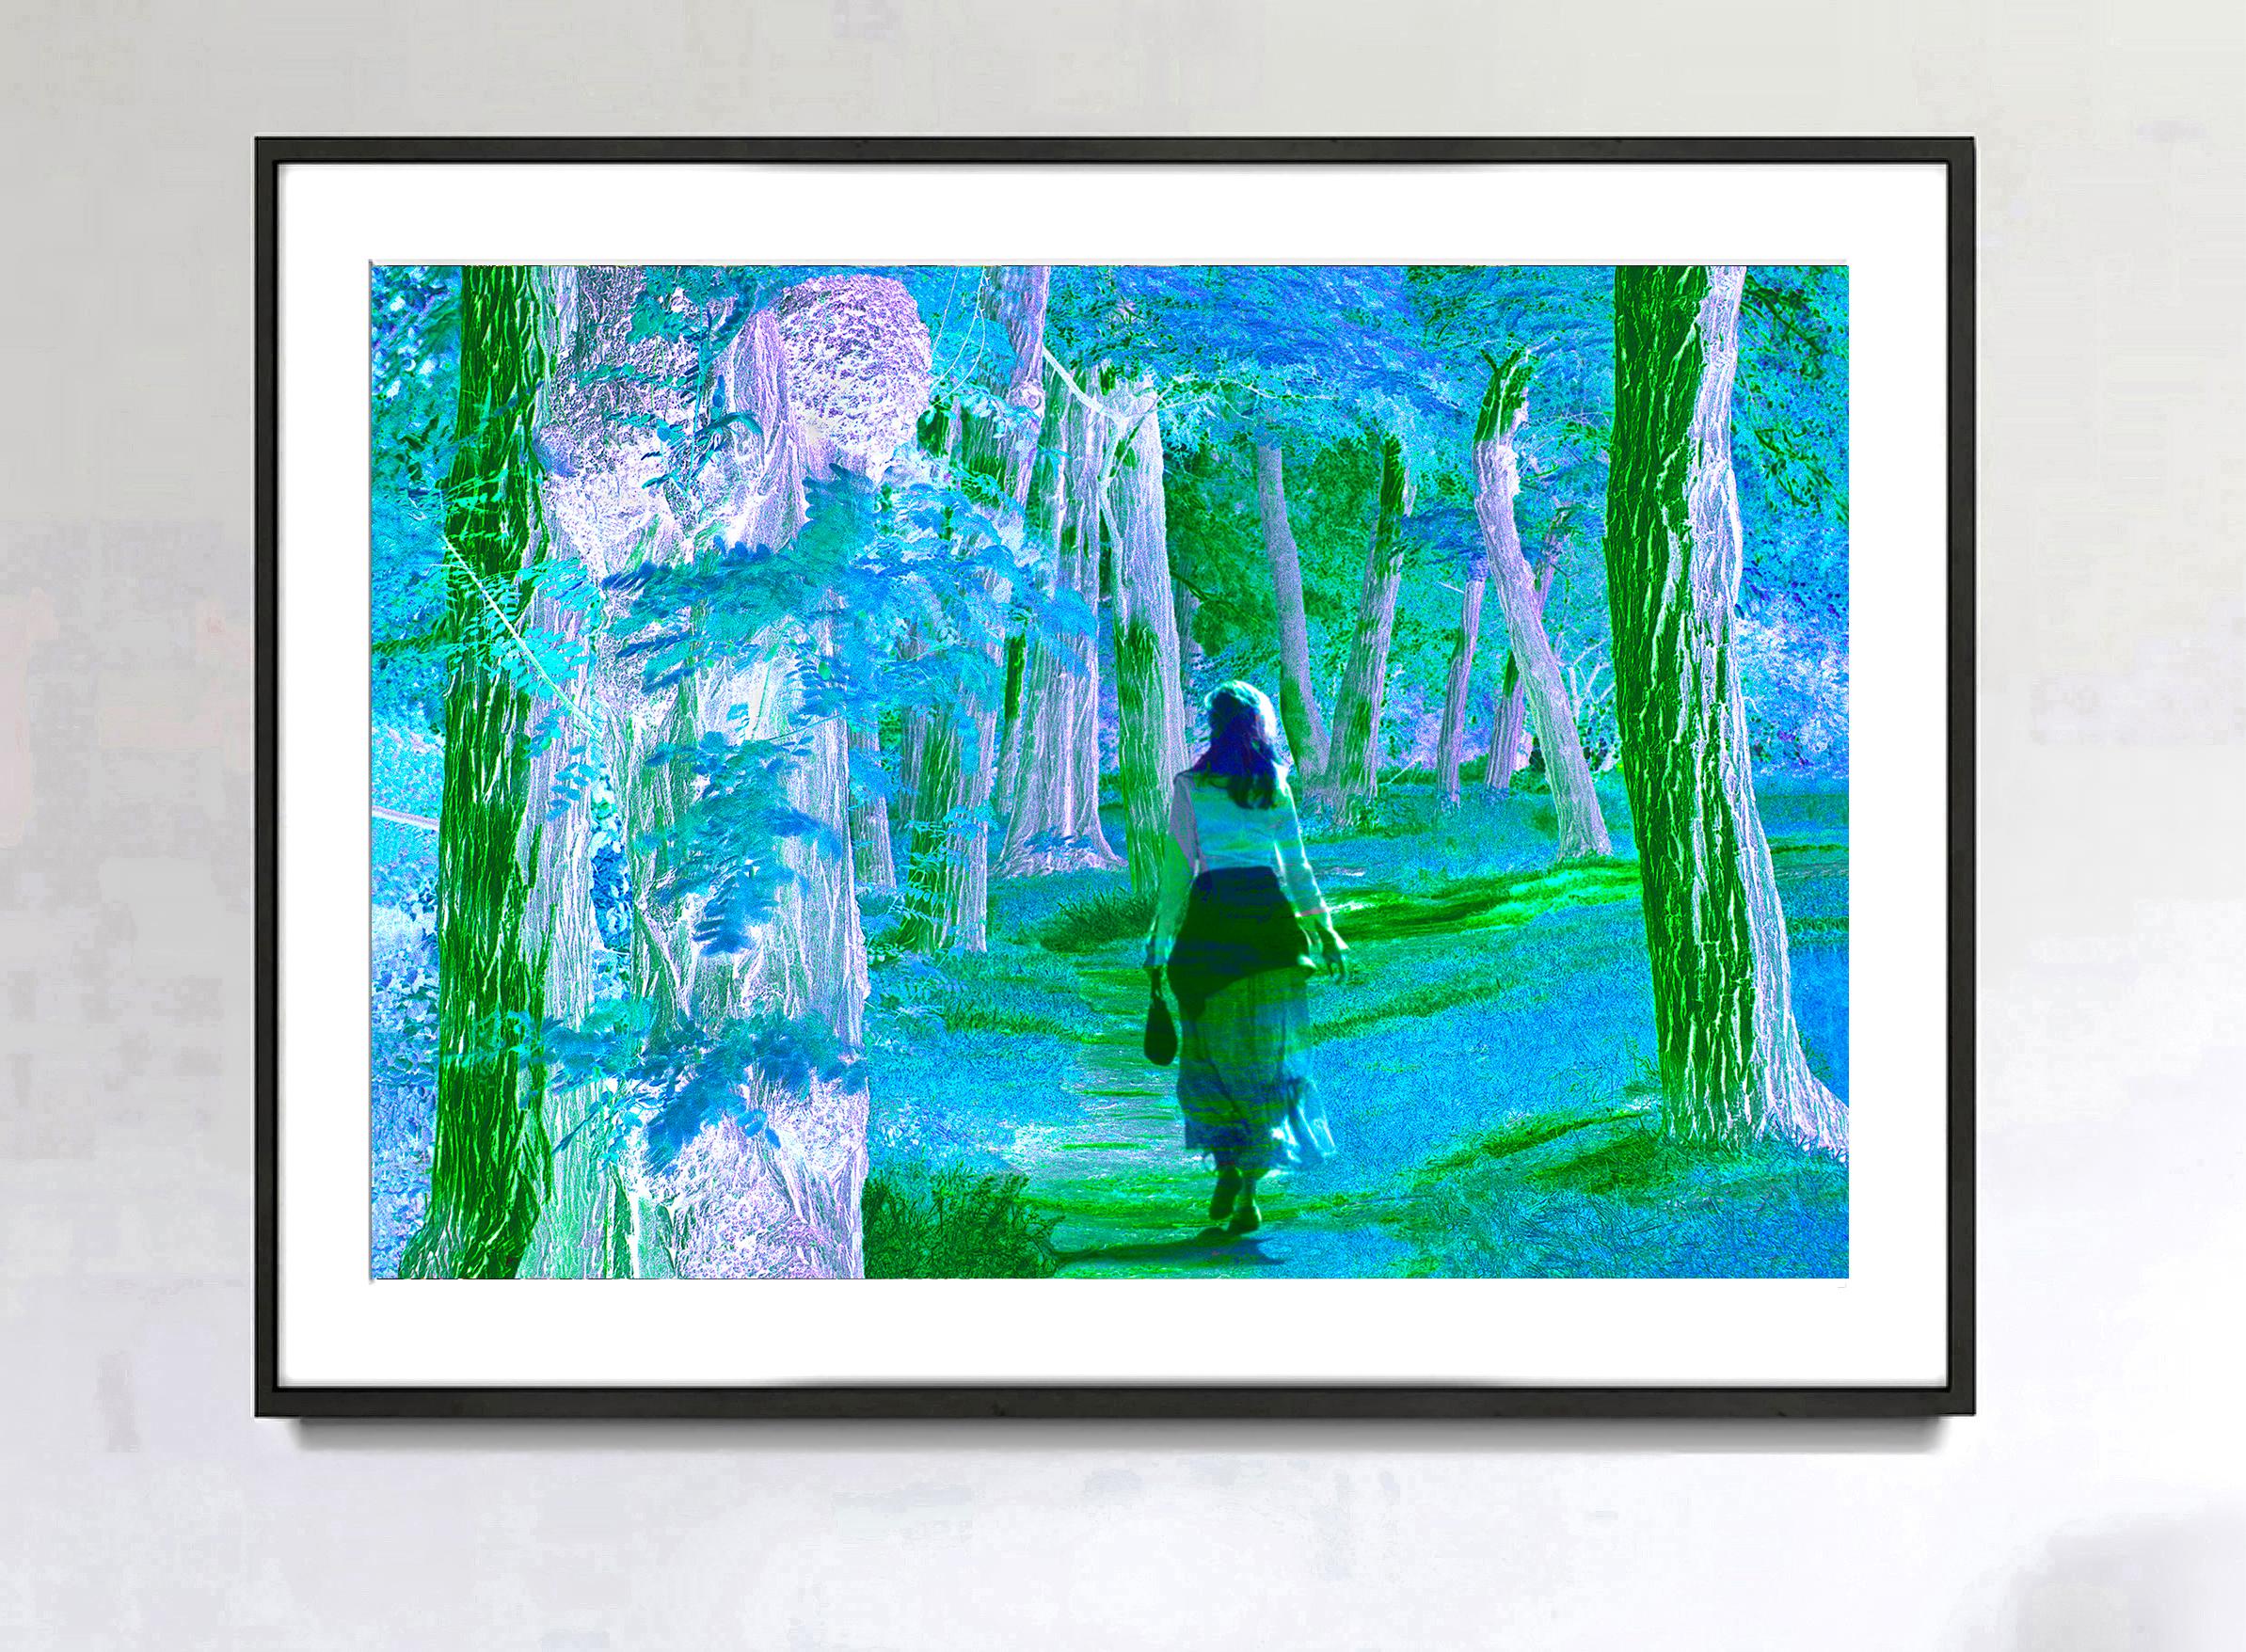  Dream Landscape - Frau im Fantasiewald in Blau-Grün – Photograph von Mitchell Funk